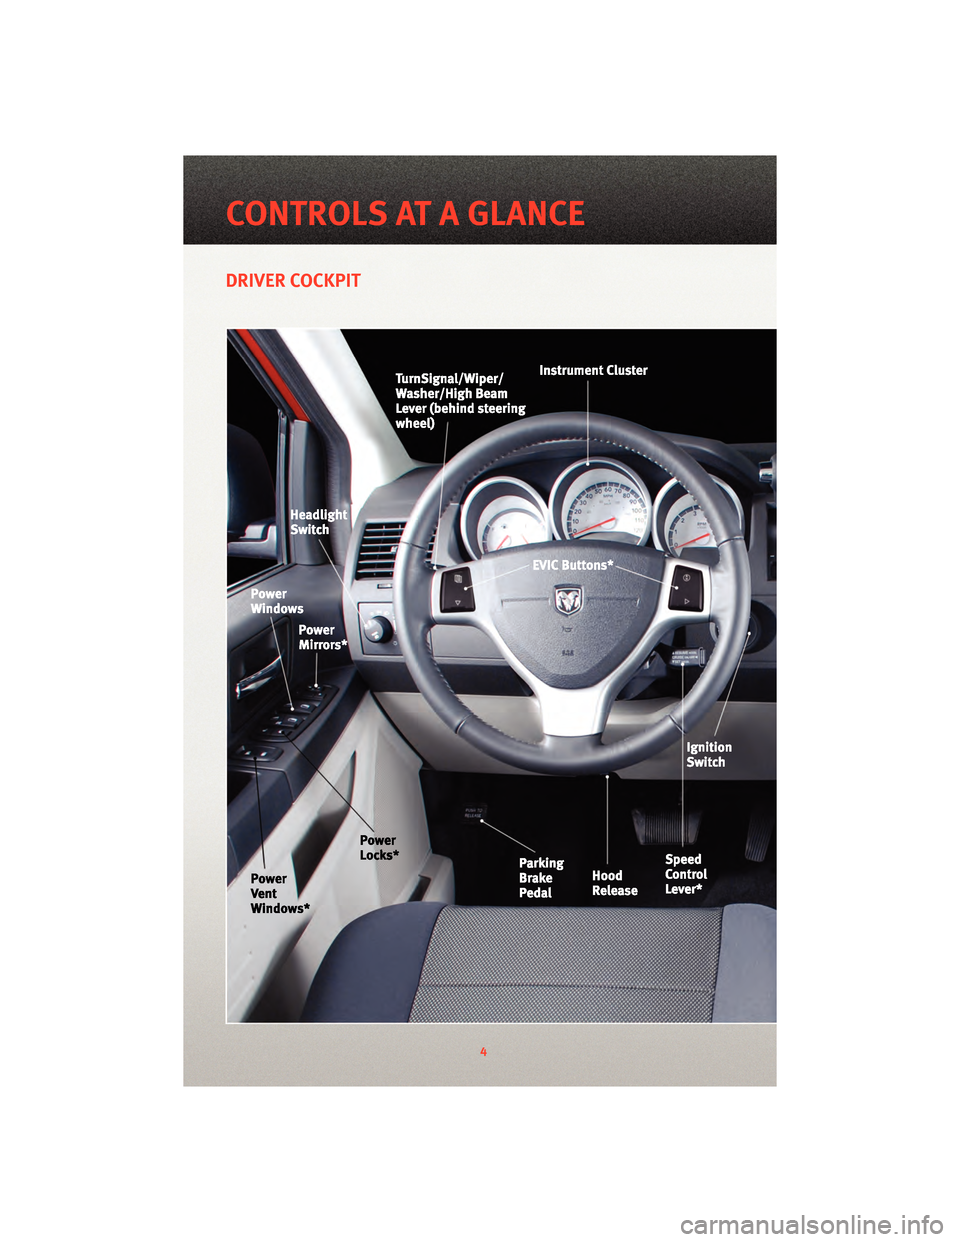 DODGE GRAND CARAVAN 2010 5.G User Guide DRIVER COCKPIT
4
CONTROLS AT A GLANCE 